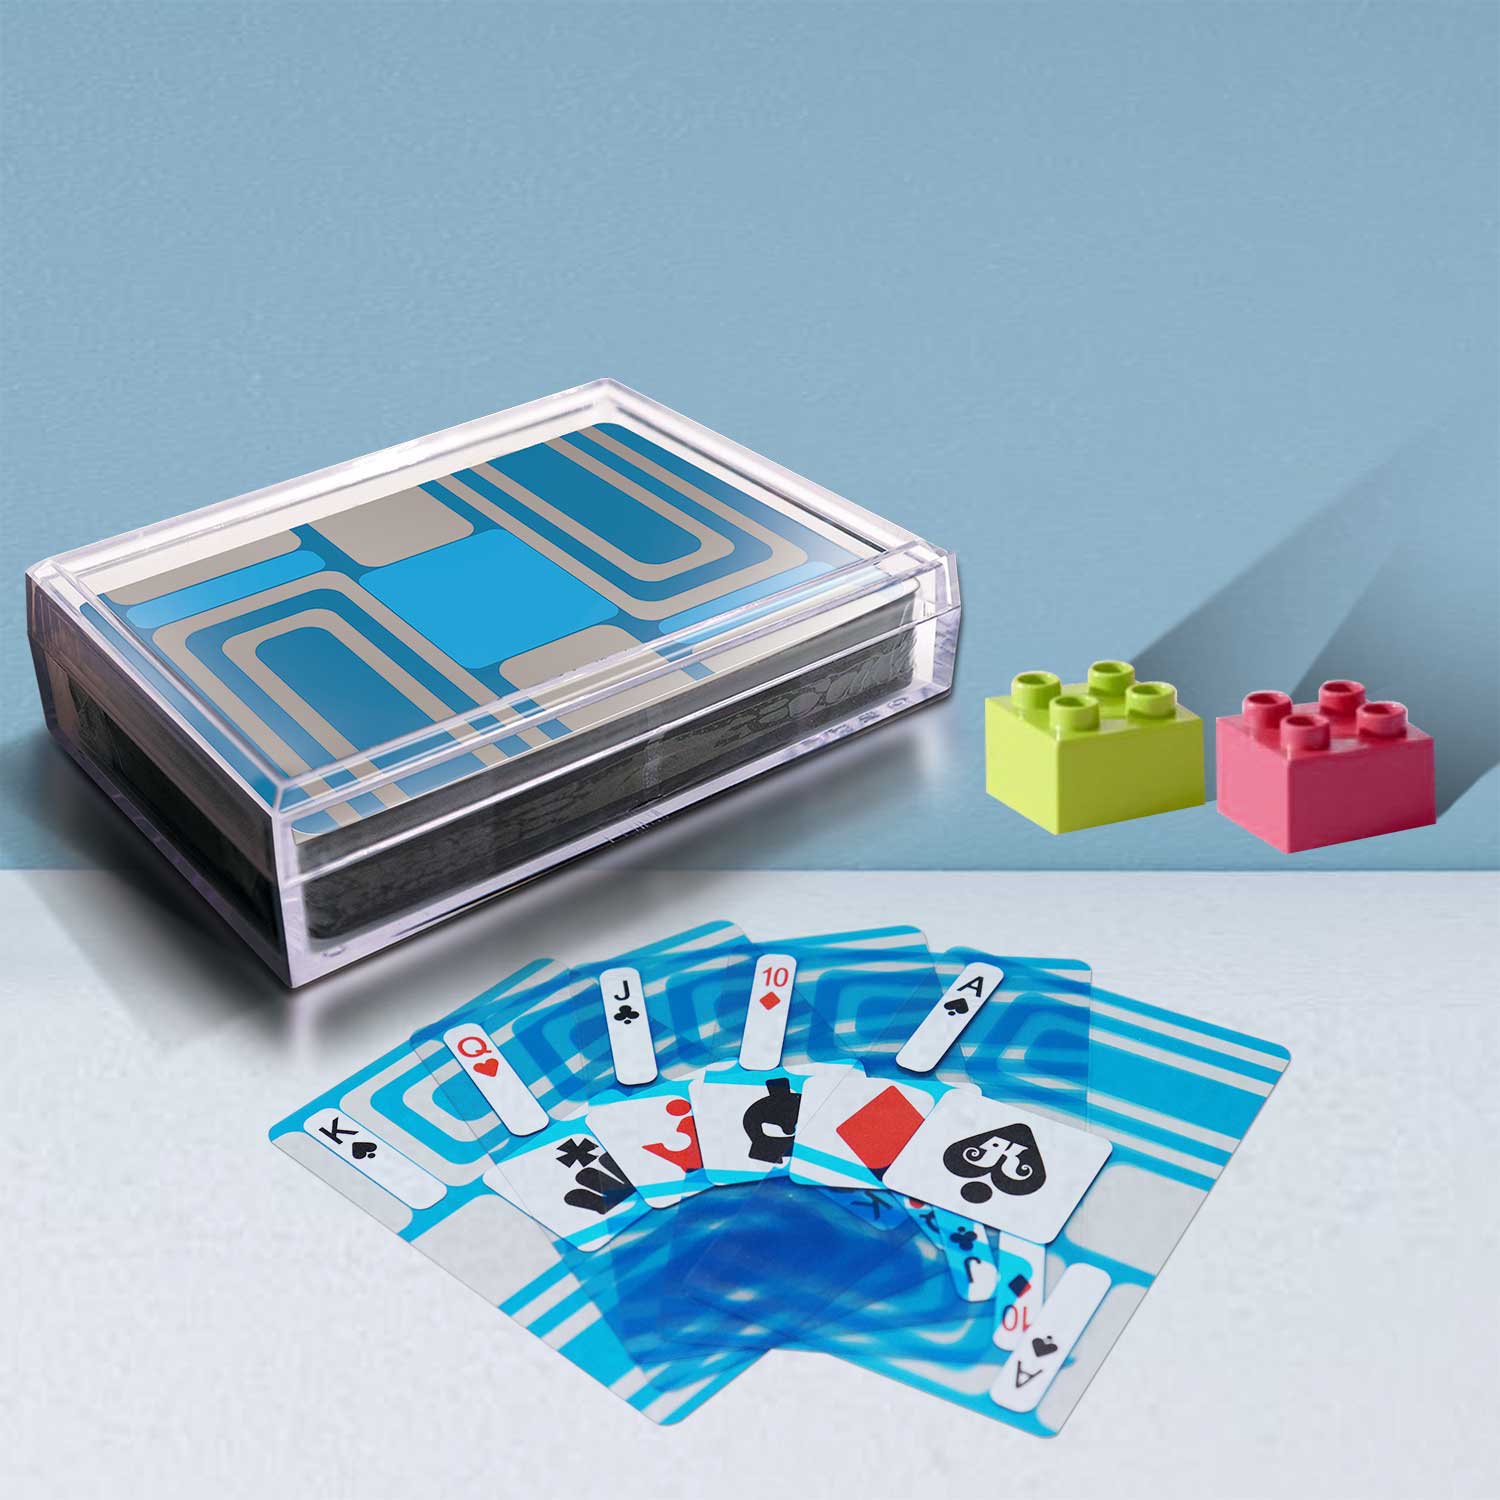 Transparent Playing Cards - Geometric Series (Circle & Line)